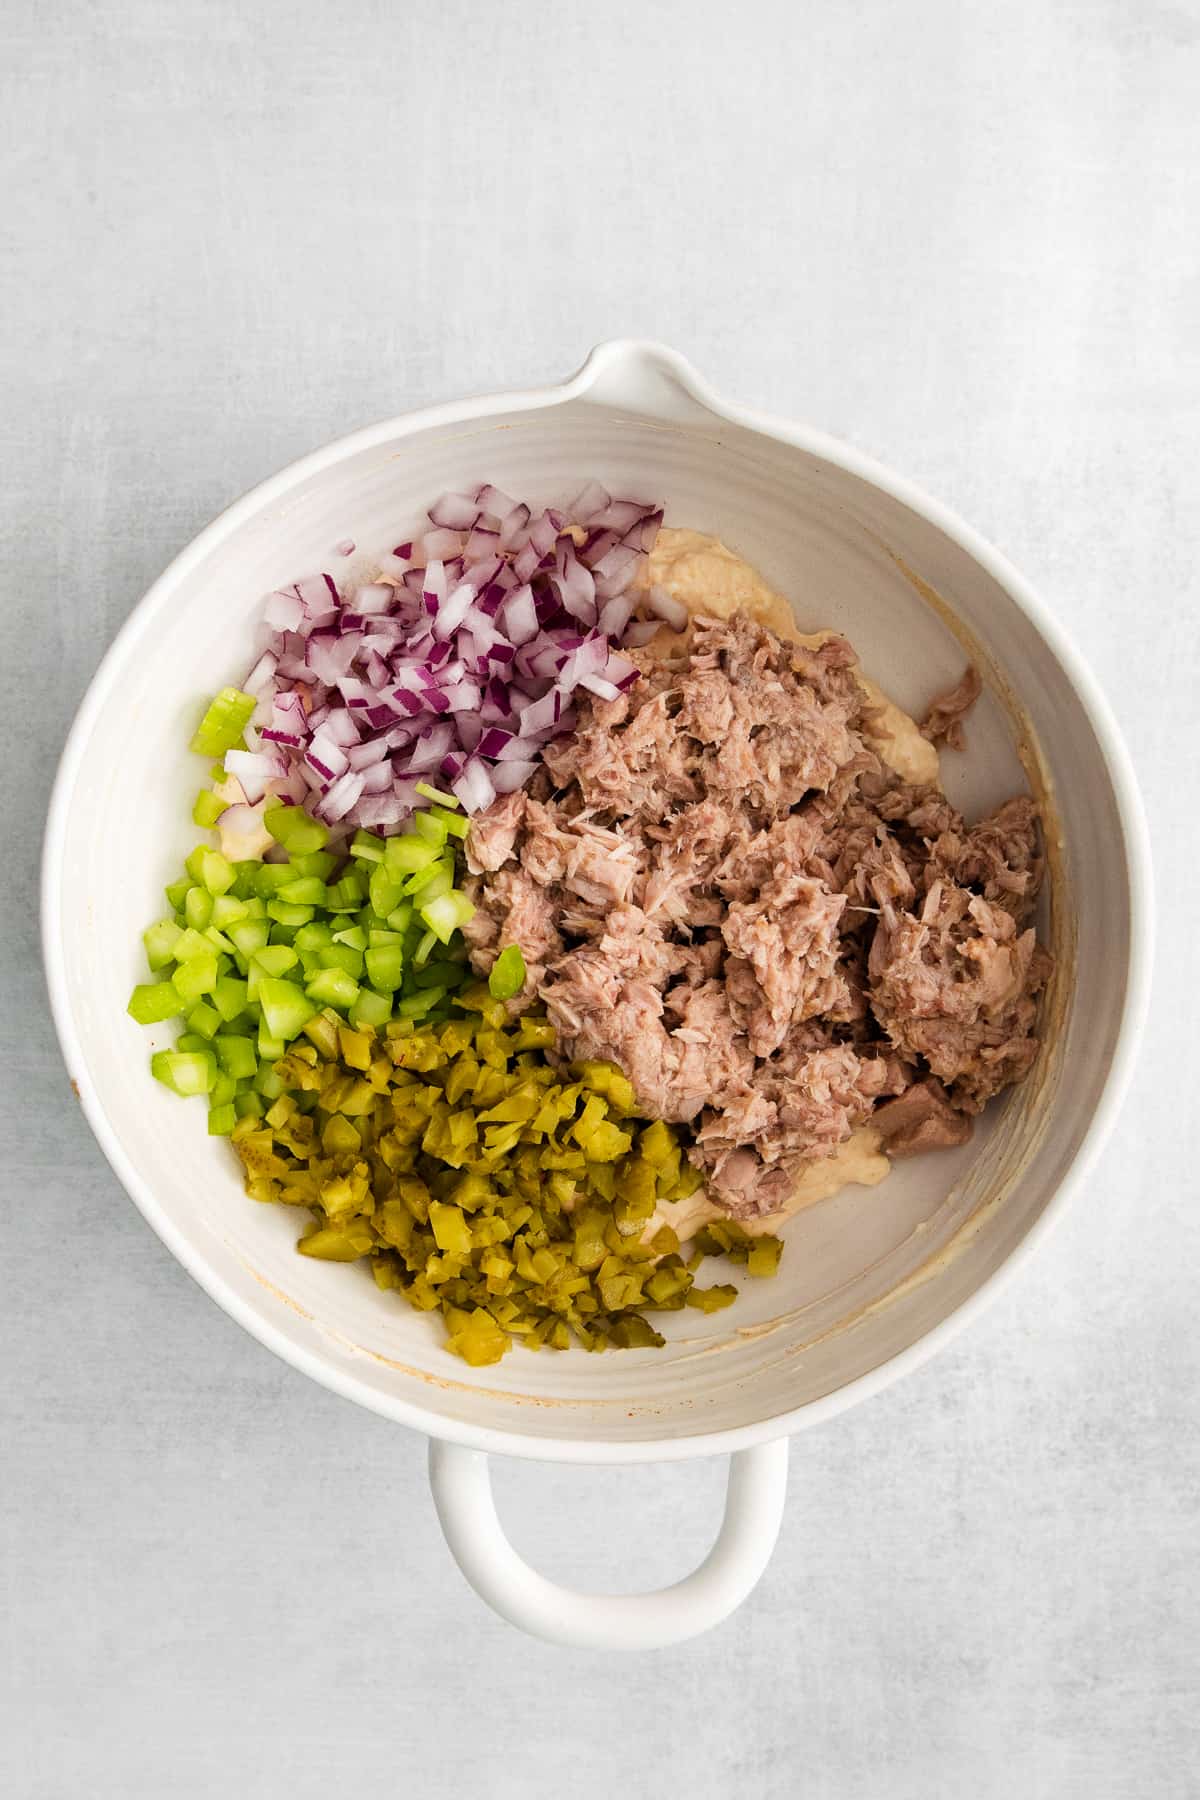 tuna salad ingredients in bowl.